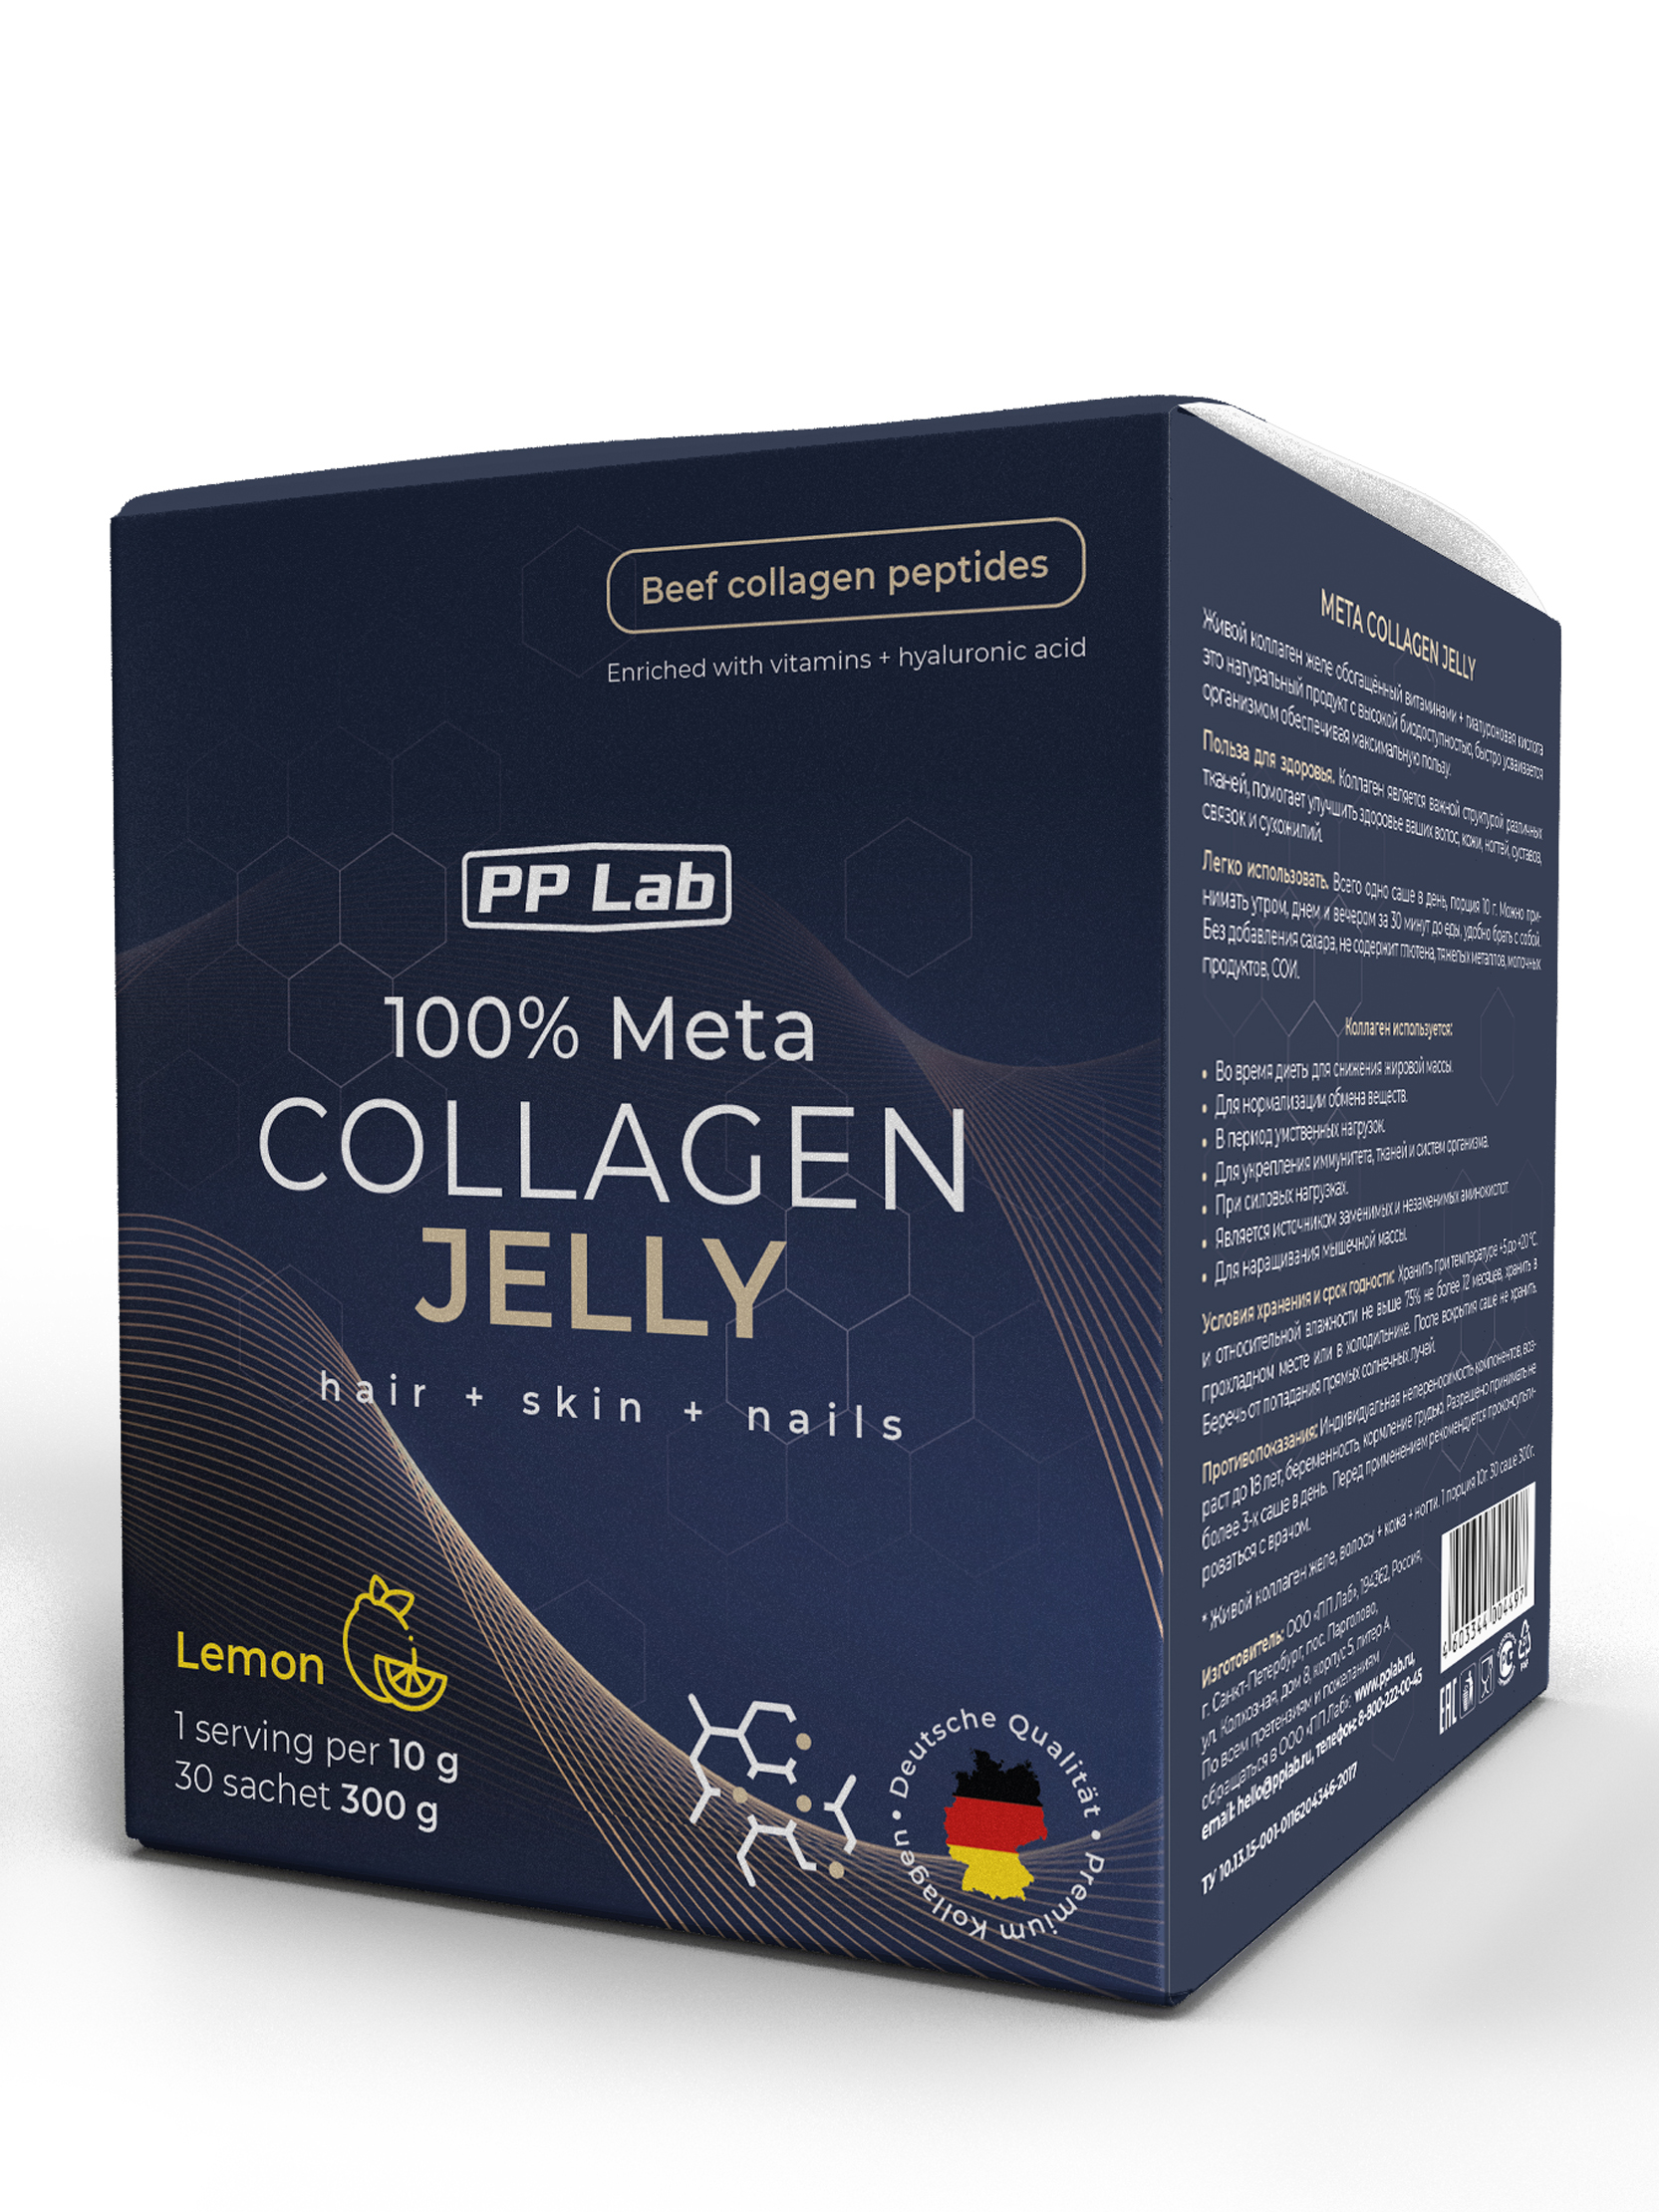 Коллаген с гиалуроновой кислотой для суставов. PP Lab Collagen. PP Lab коллаген. Коллаген Jelly. Коллаген желе.